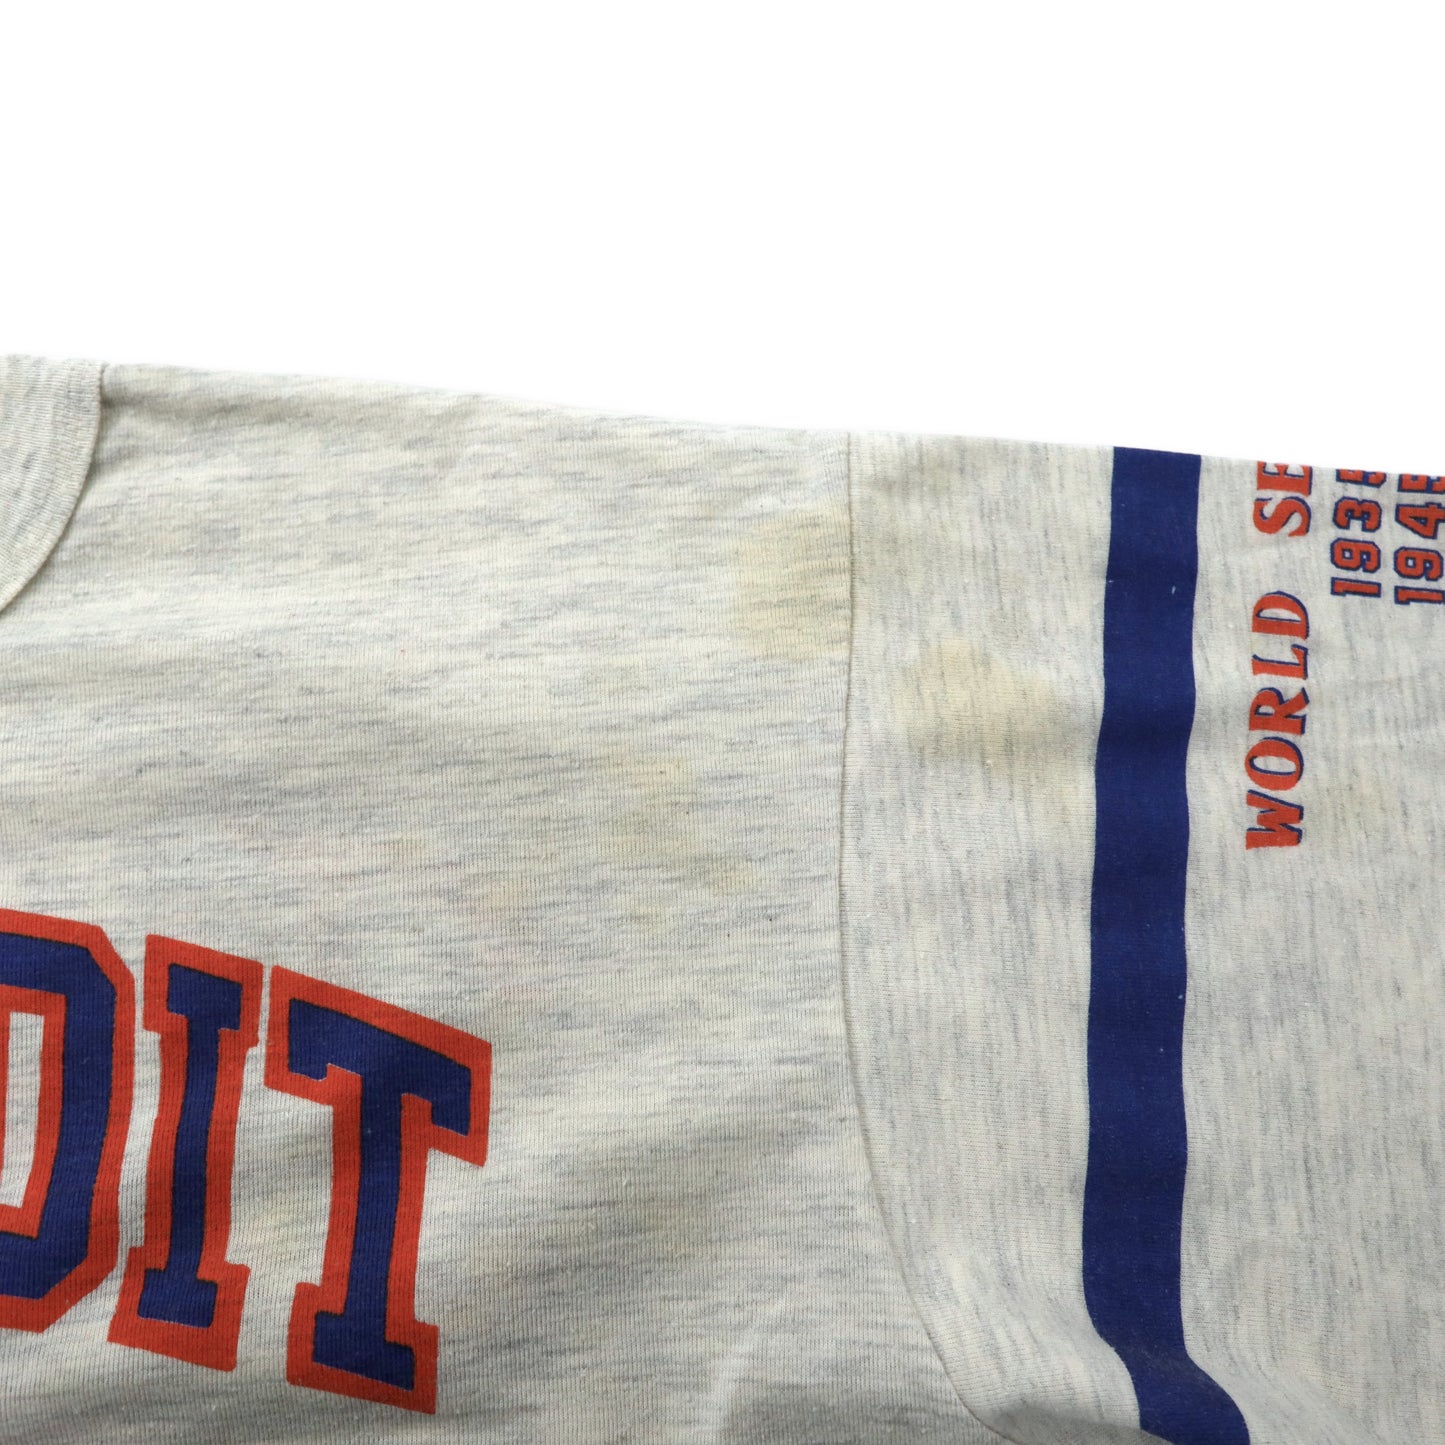 USA製 90年代 Long Gone by GARAN MLB ベースボールプリント ラグラン Tシャツ XL ホワイト コットン DETROIT TIGERS